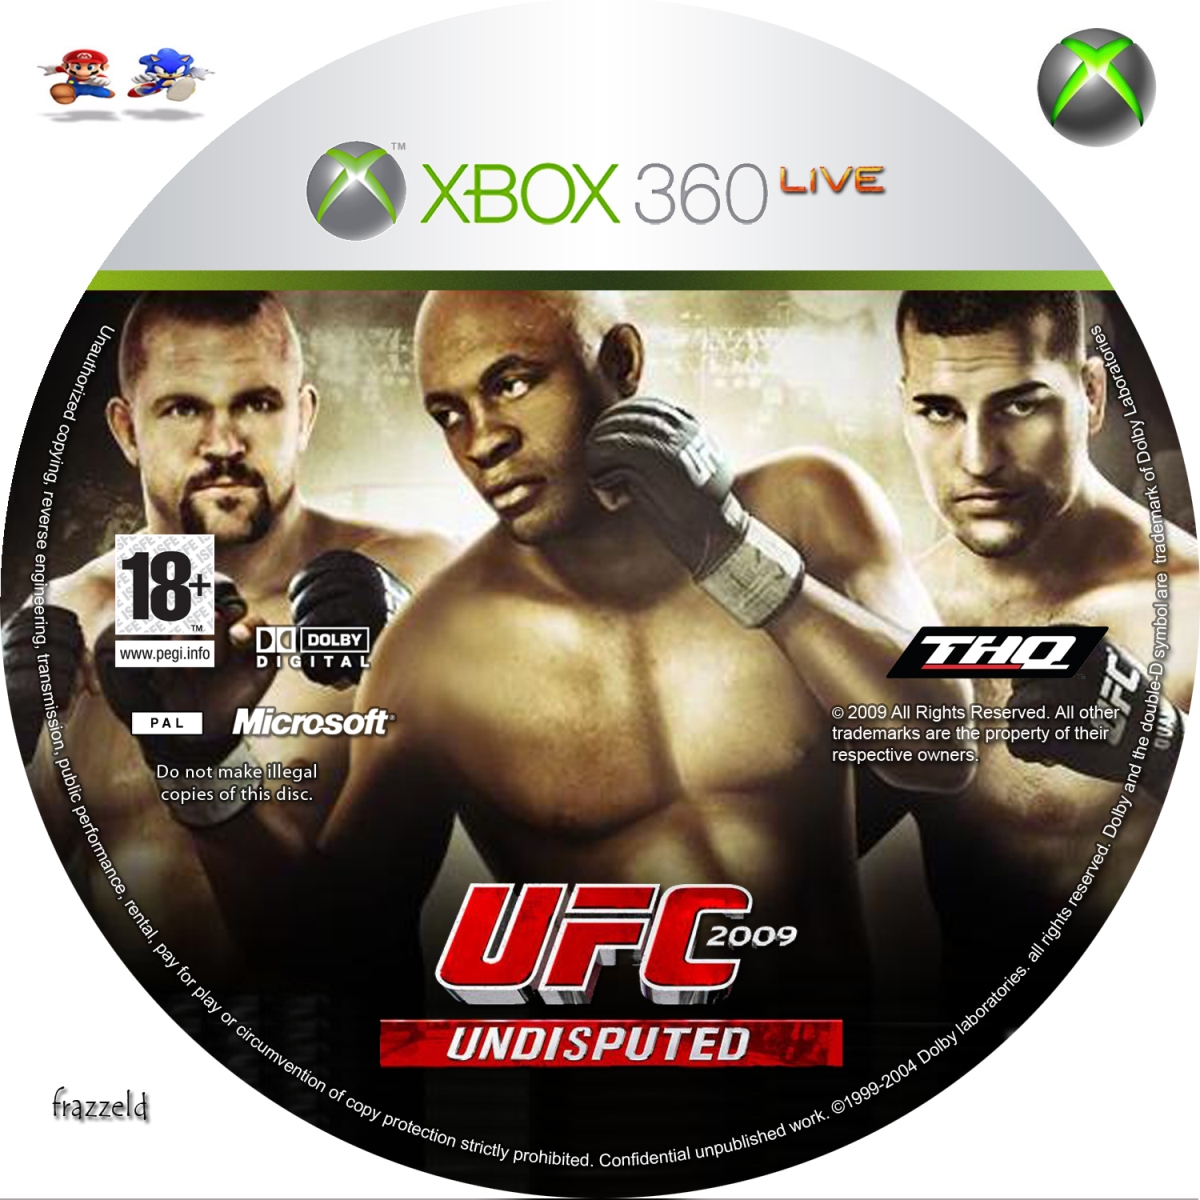 Xbox 360 игры на компьютер. UFC 2009 Undisputed Xbox 360. UFC 3 Undisputed Xbox 360 диск. Обложка УФС 3 Xbox 360. Диск для Xbox 360 UFC 2.